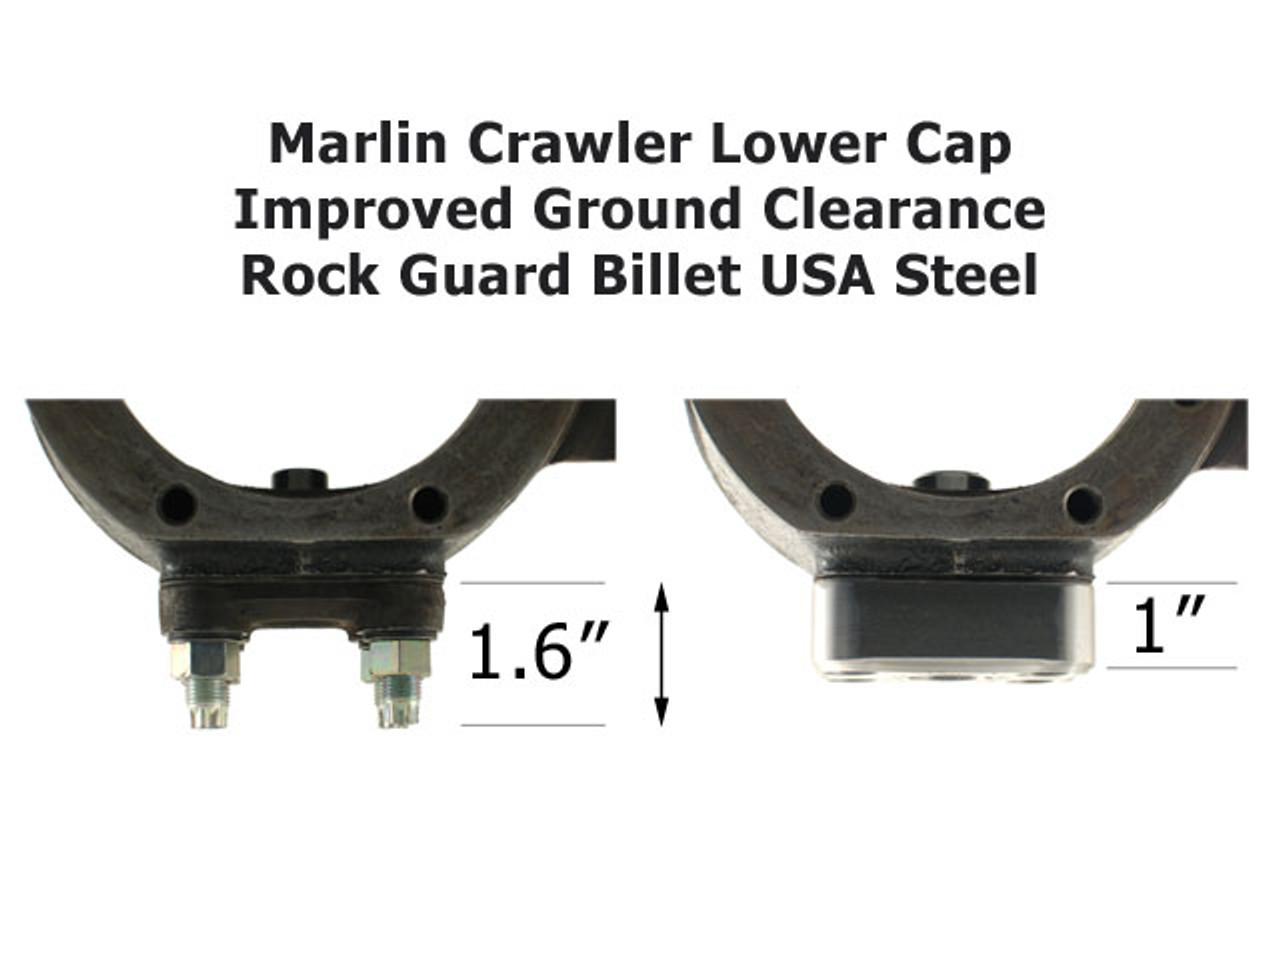 Marlin Crawler Toyota 25mm Steering Pin Upgrade Kit